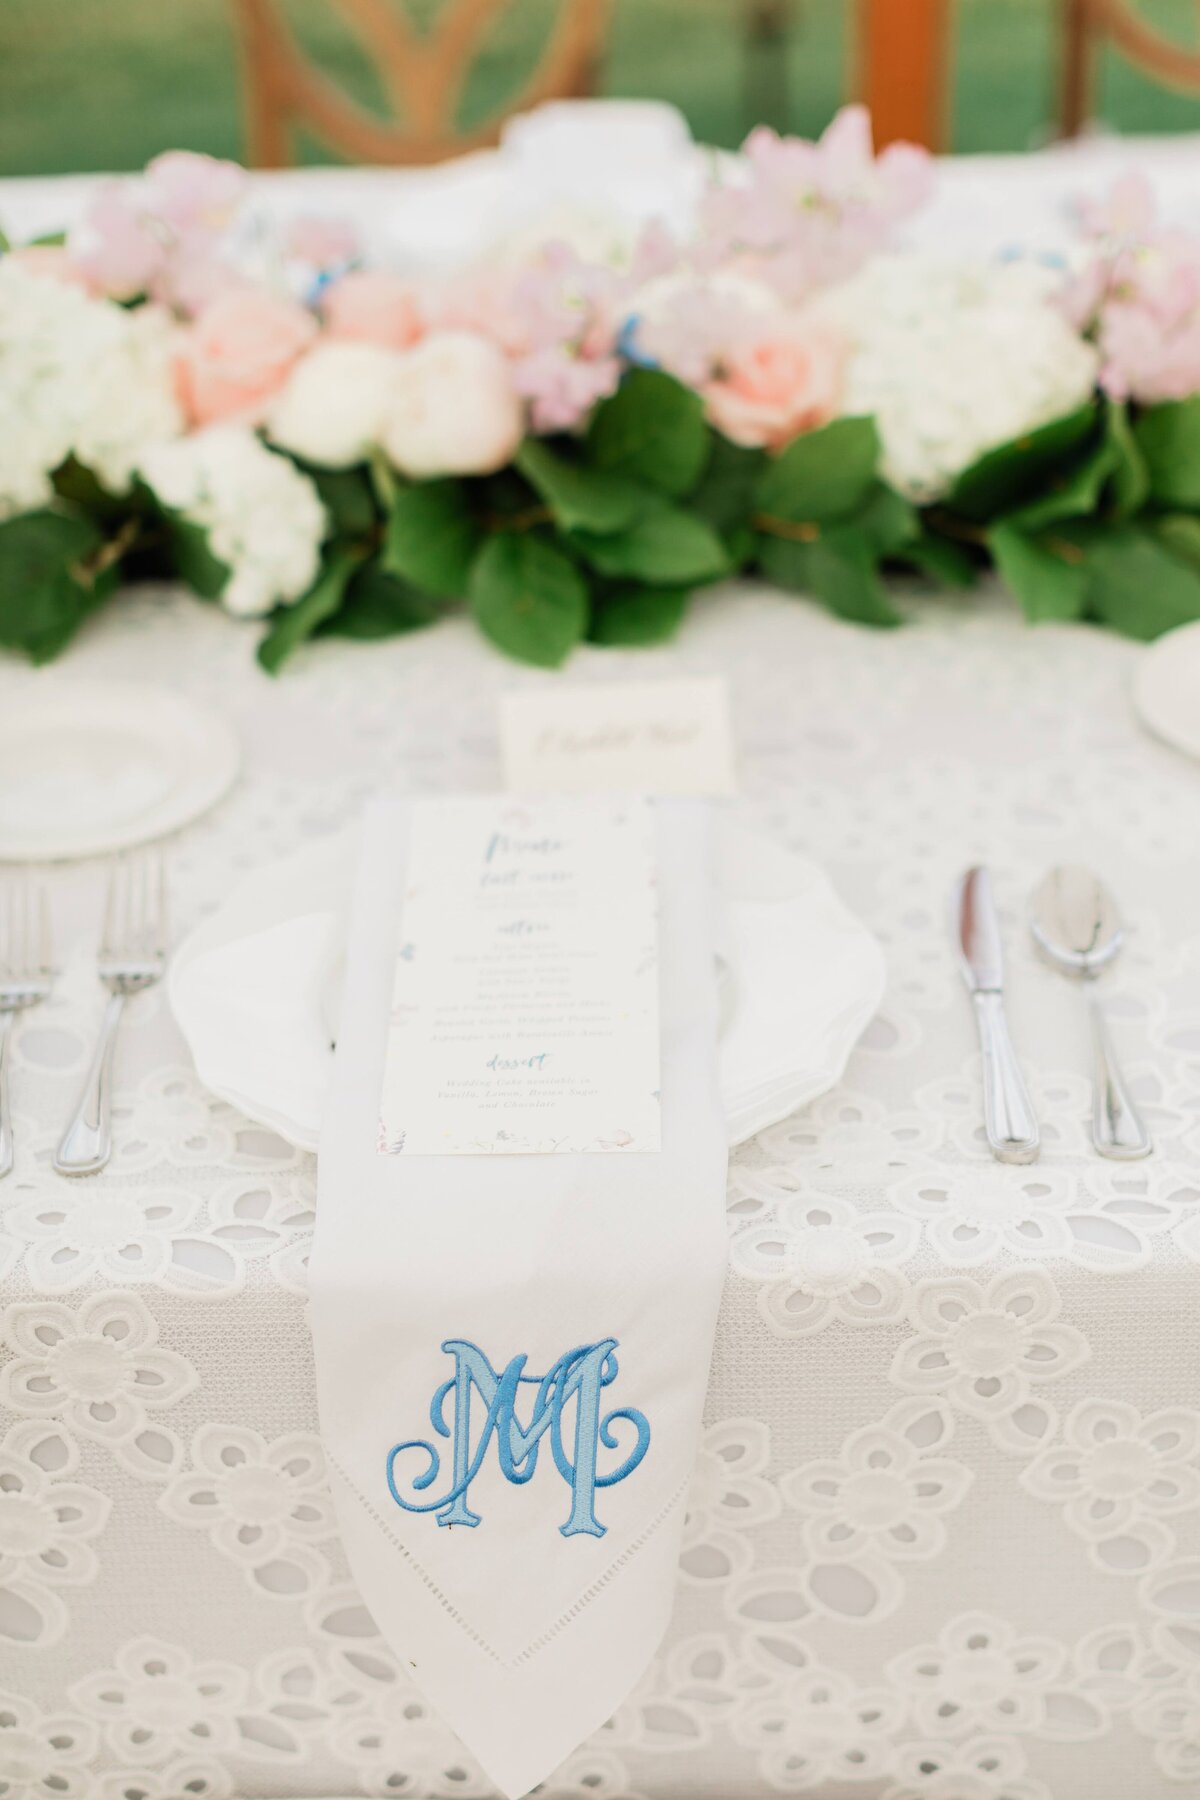 Monogram napkin for a wedding headtable place setting Blue monogram